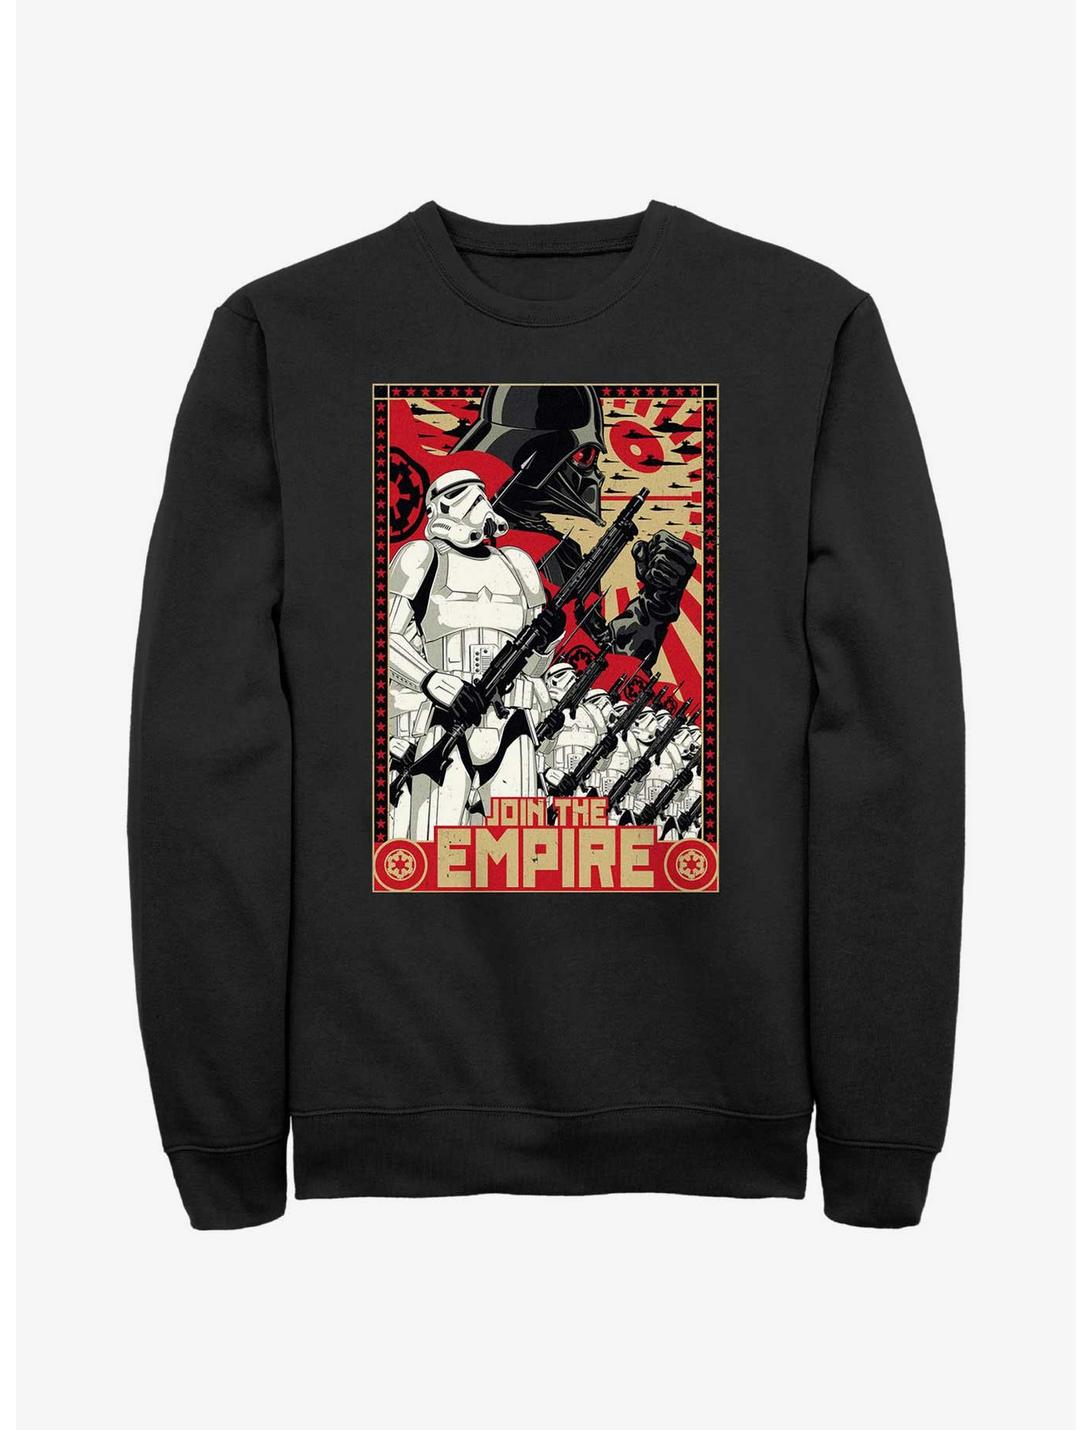 Star Wars Join The Empire Propaganda Sweatshirt, BLACK, hi-res